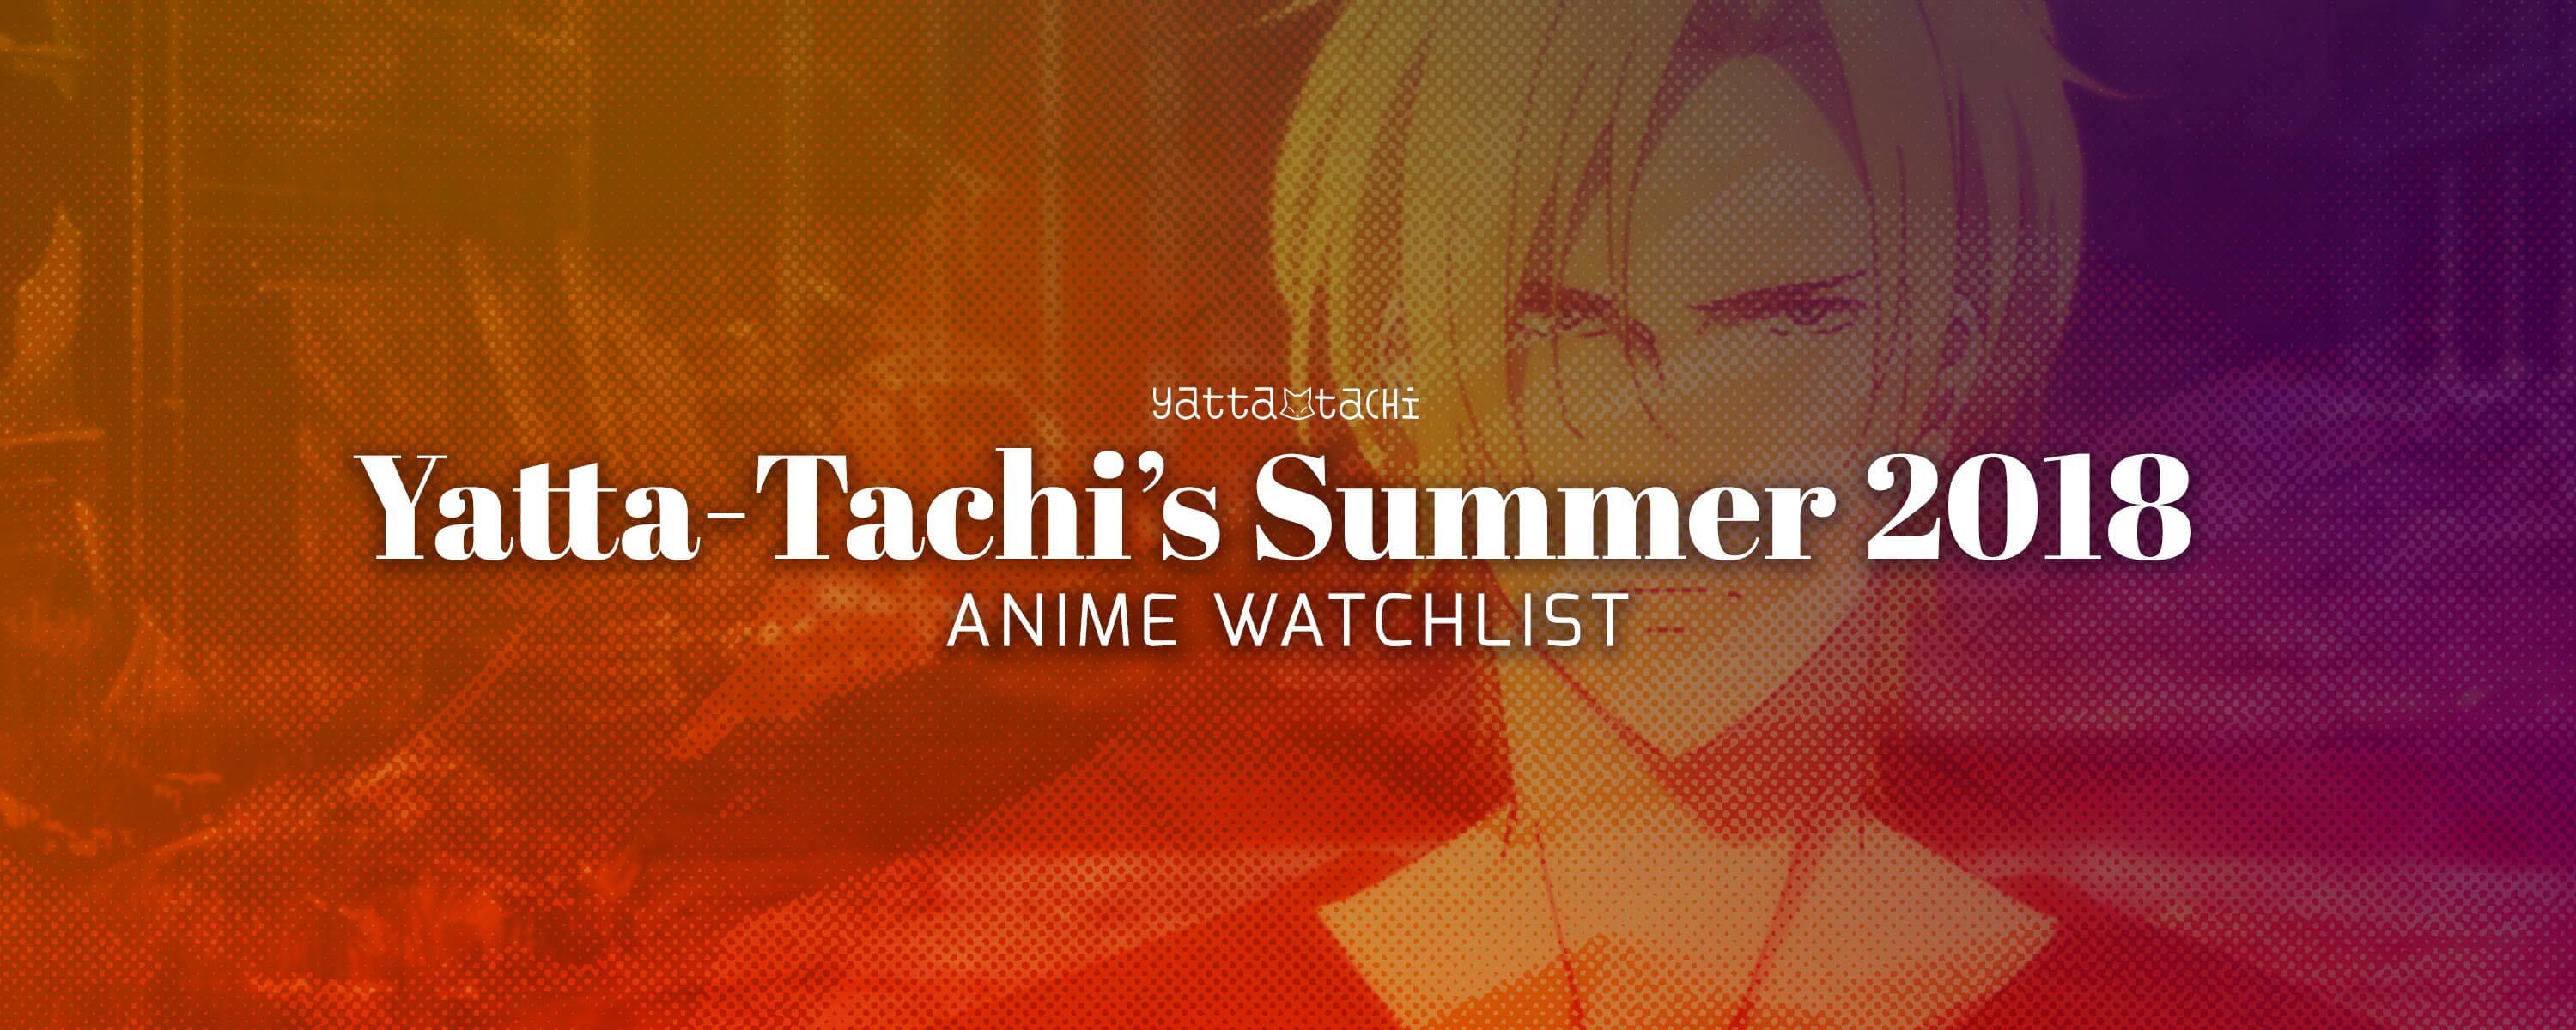 Yatta-Tachi's Summer 2018 Anime Watchlist | Yatta-Tachi